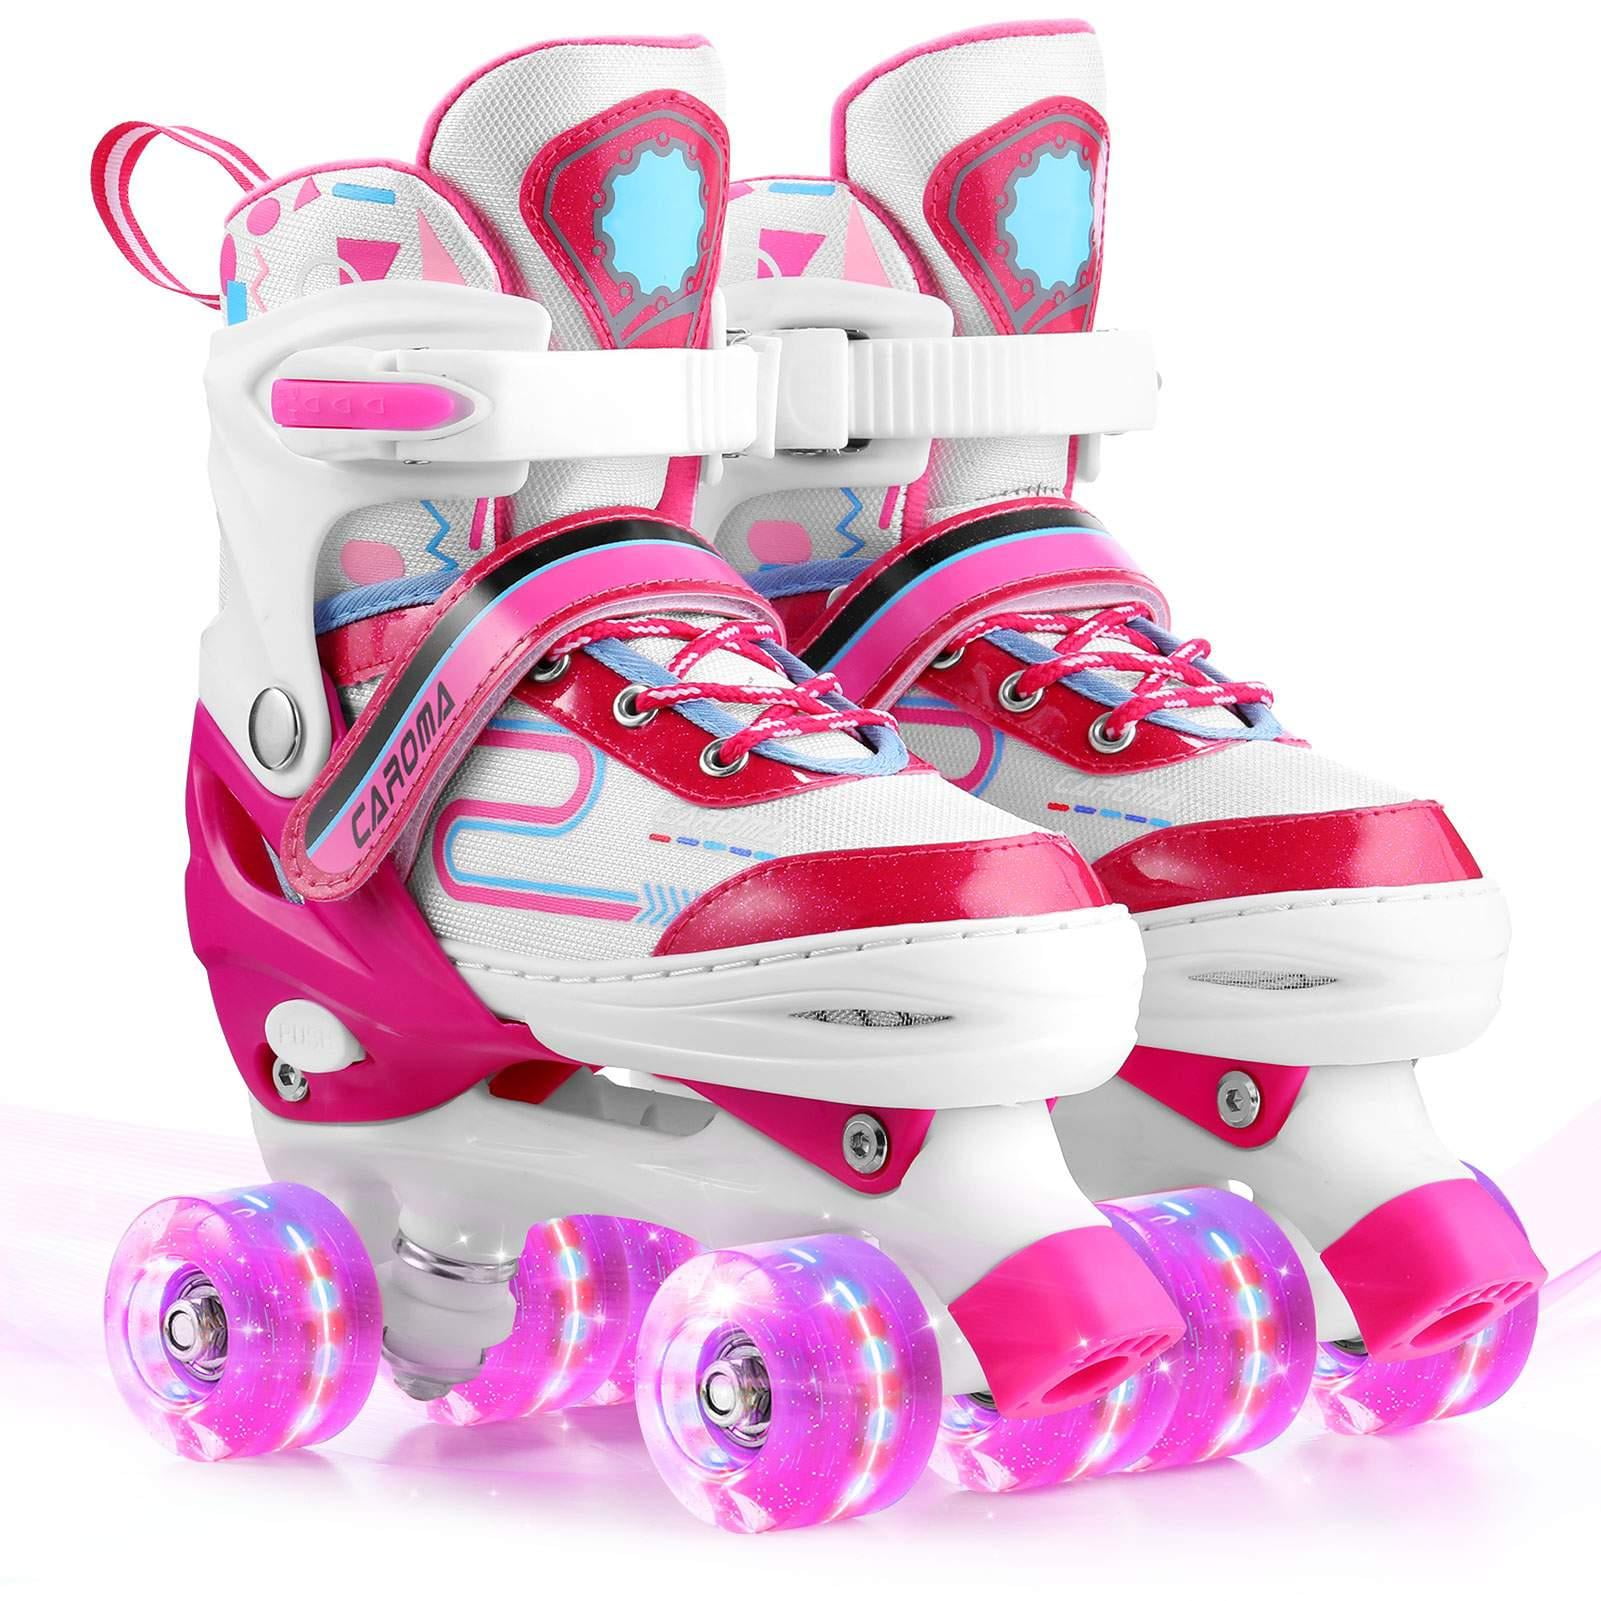 Kids Adjustable Roller Skates for Girls Boys Beginners All 8 Wheels Illuminating. 